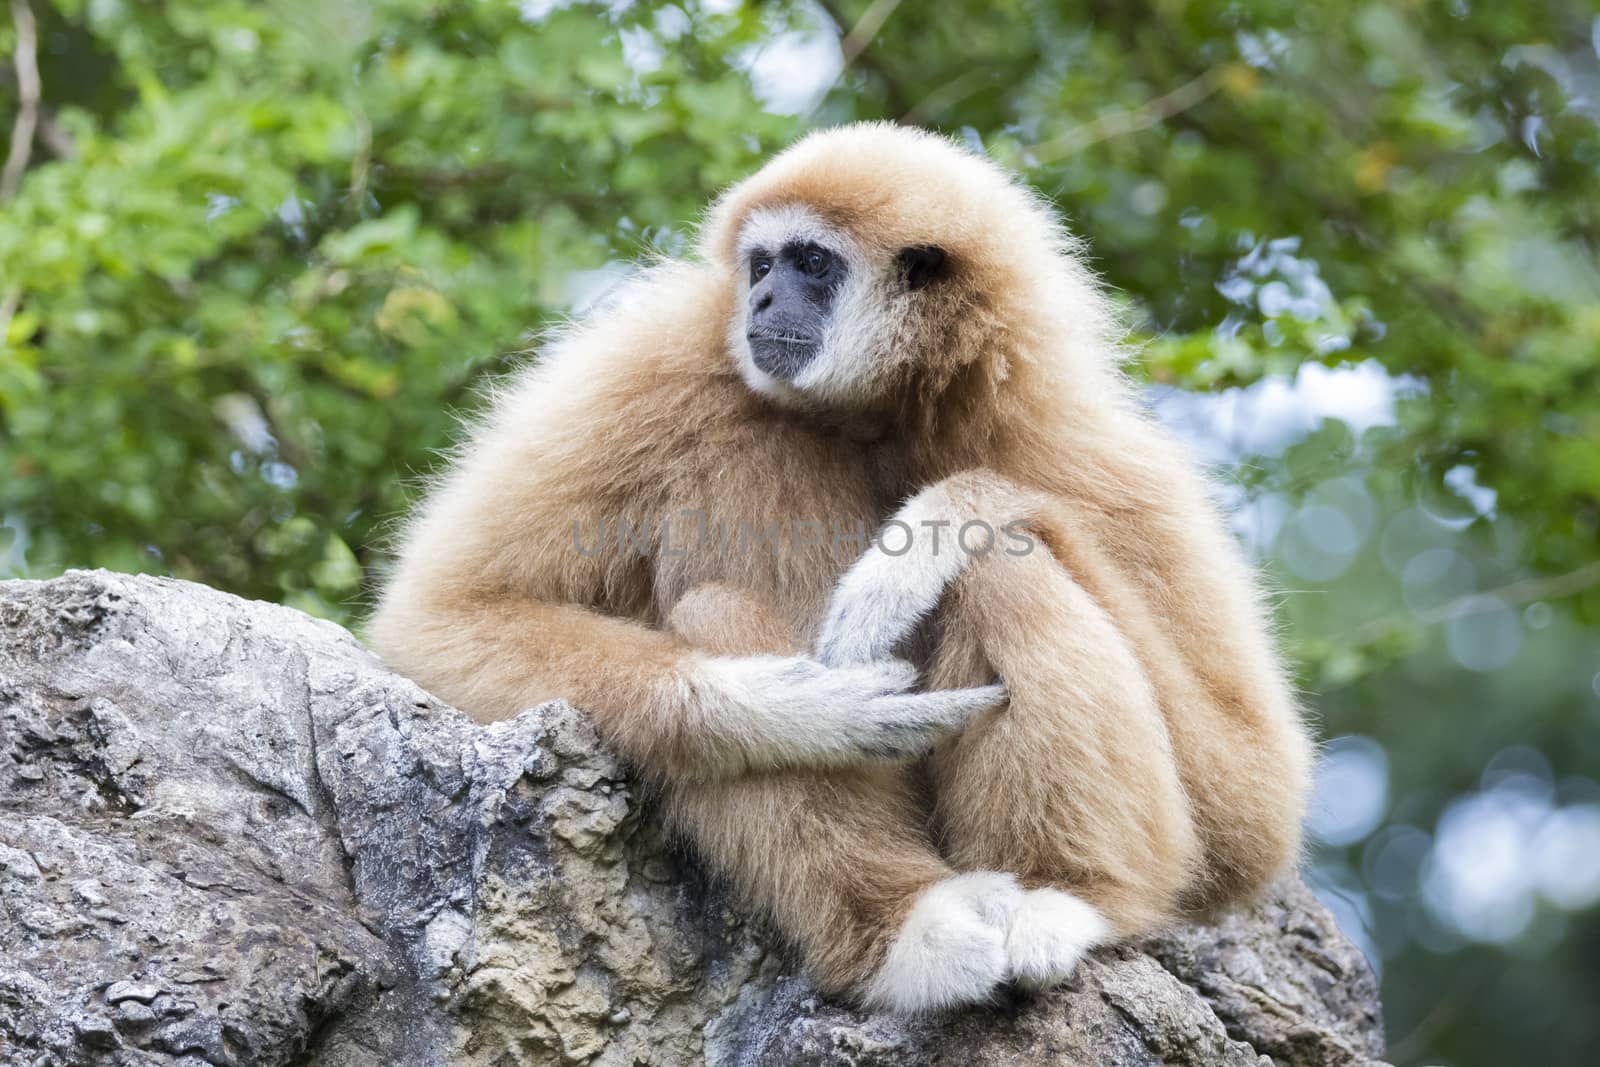 Image of a gibbon sitting on rocks